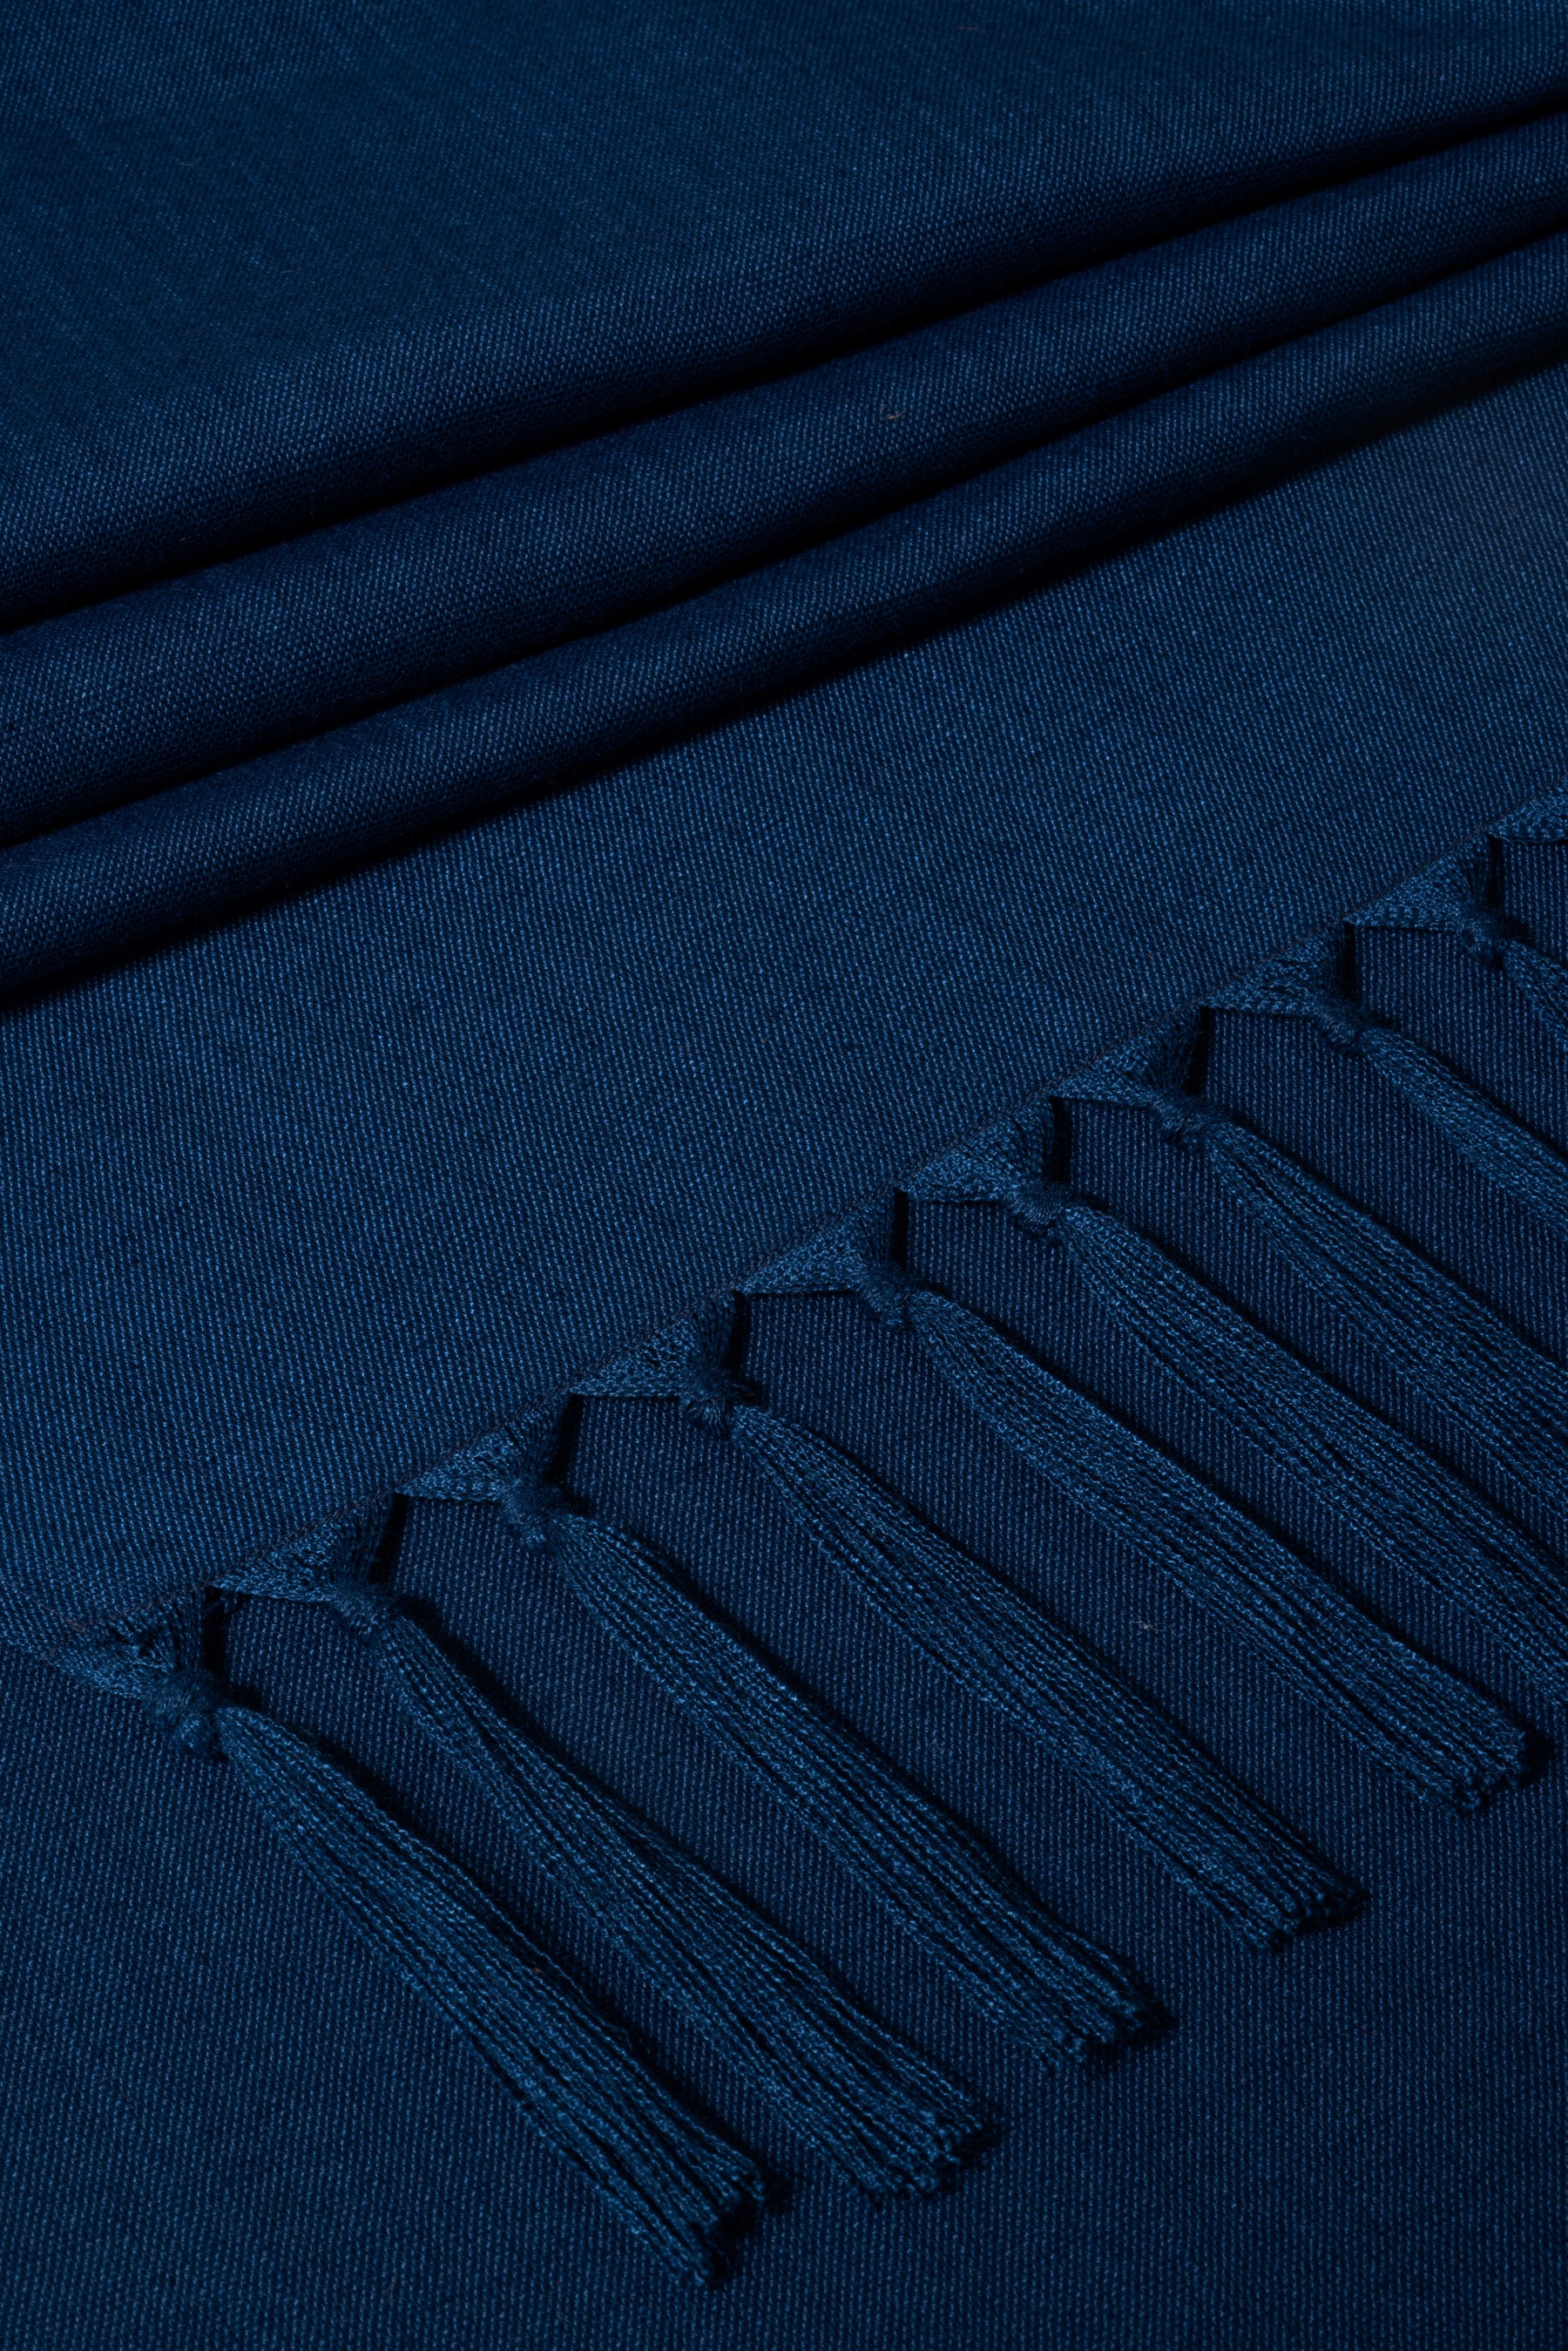 Navy Blue Linen Textured Table Runner - Tassel